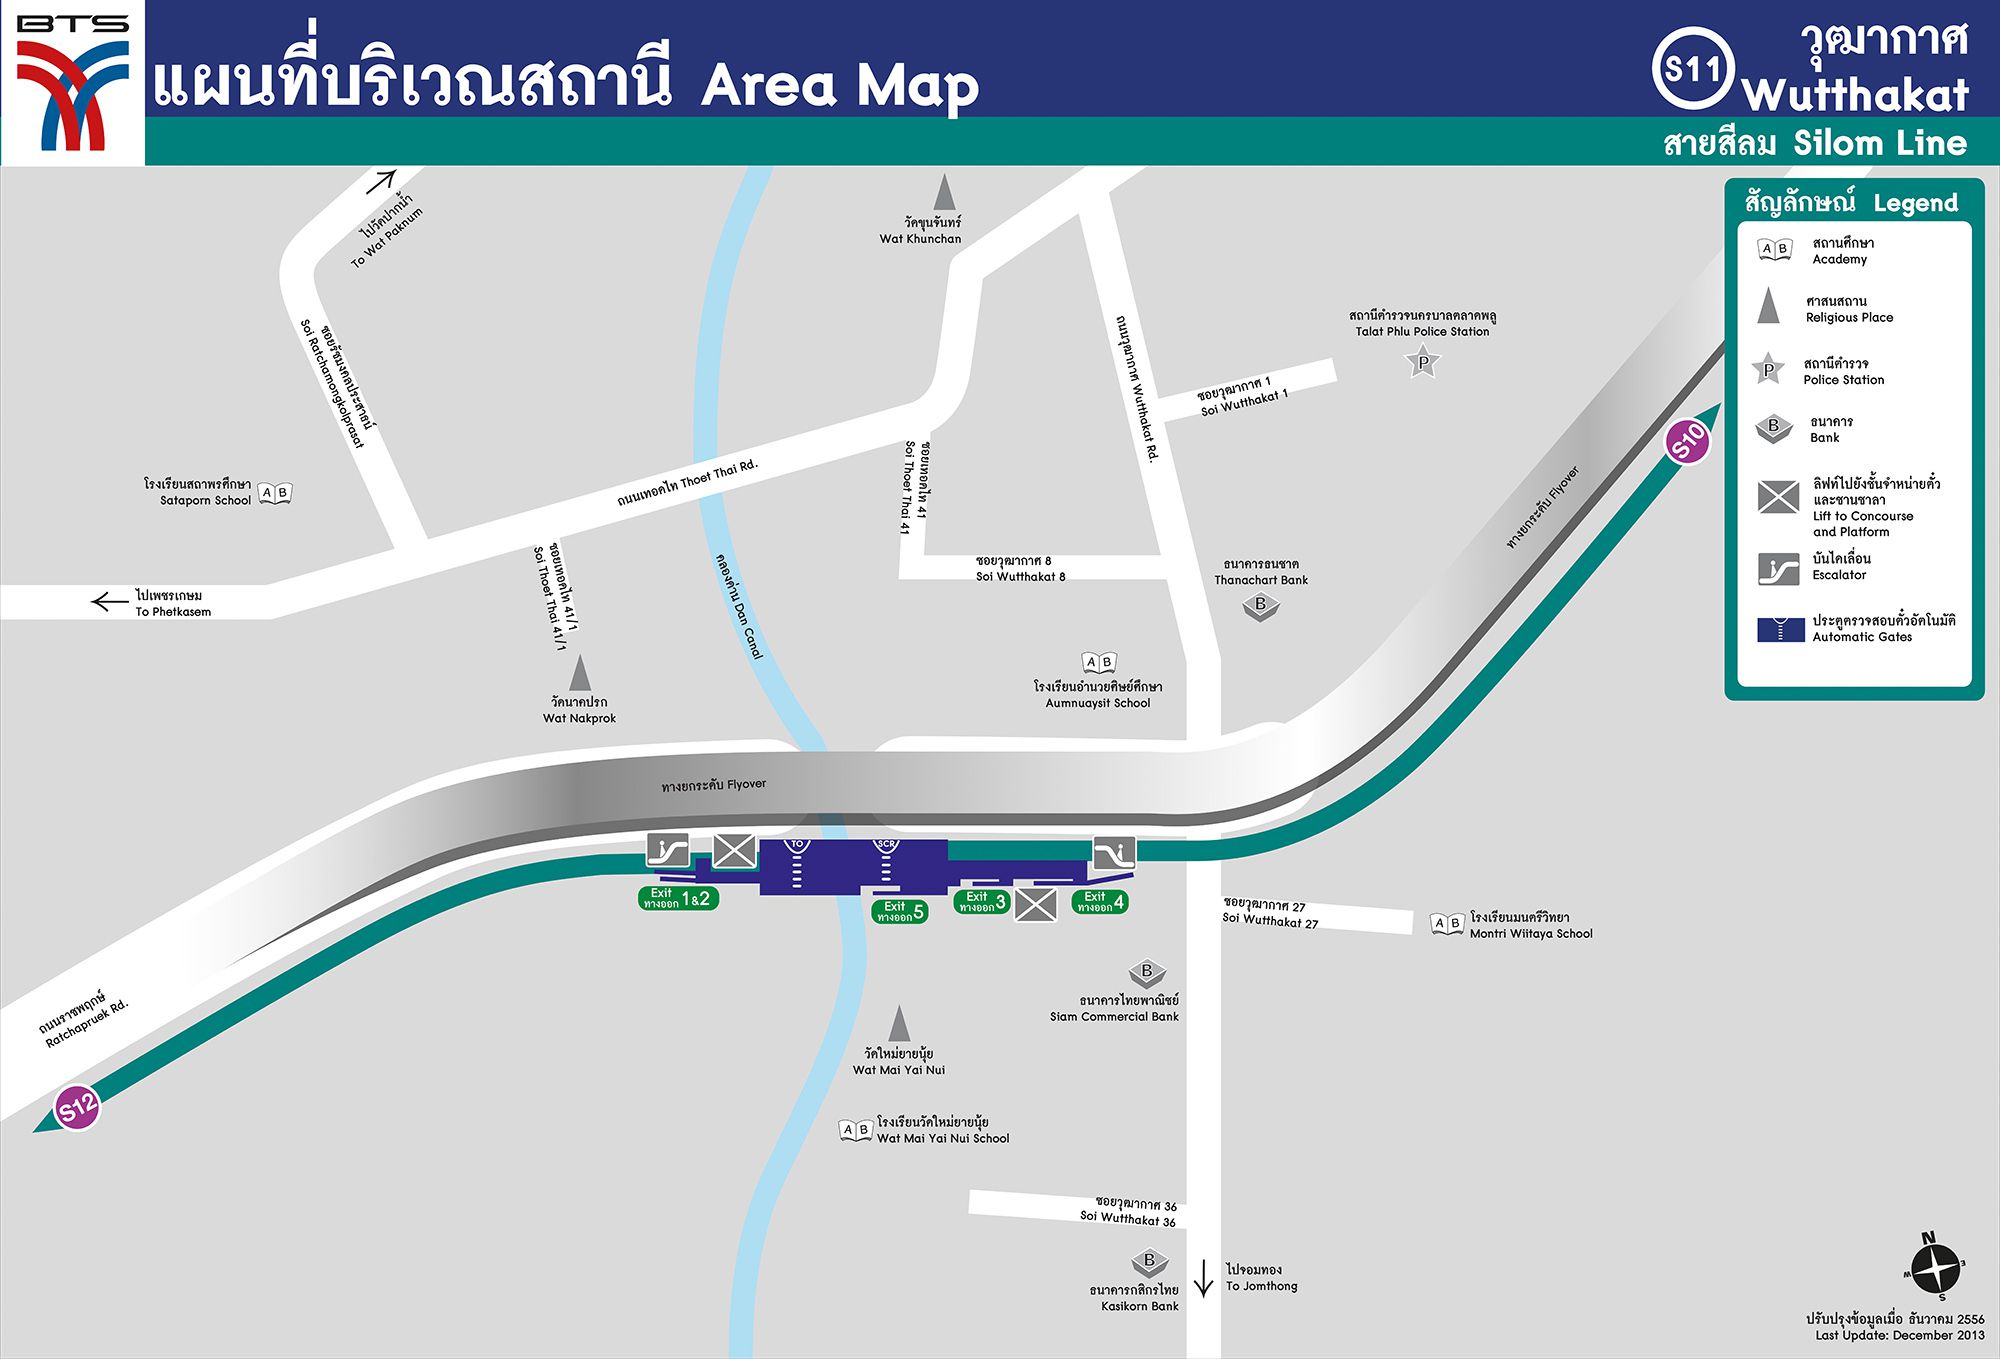 Trạm Bts Wutthakat (S11) -Skytrain Thái Lan